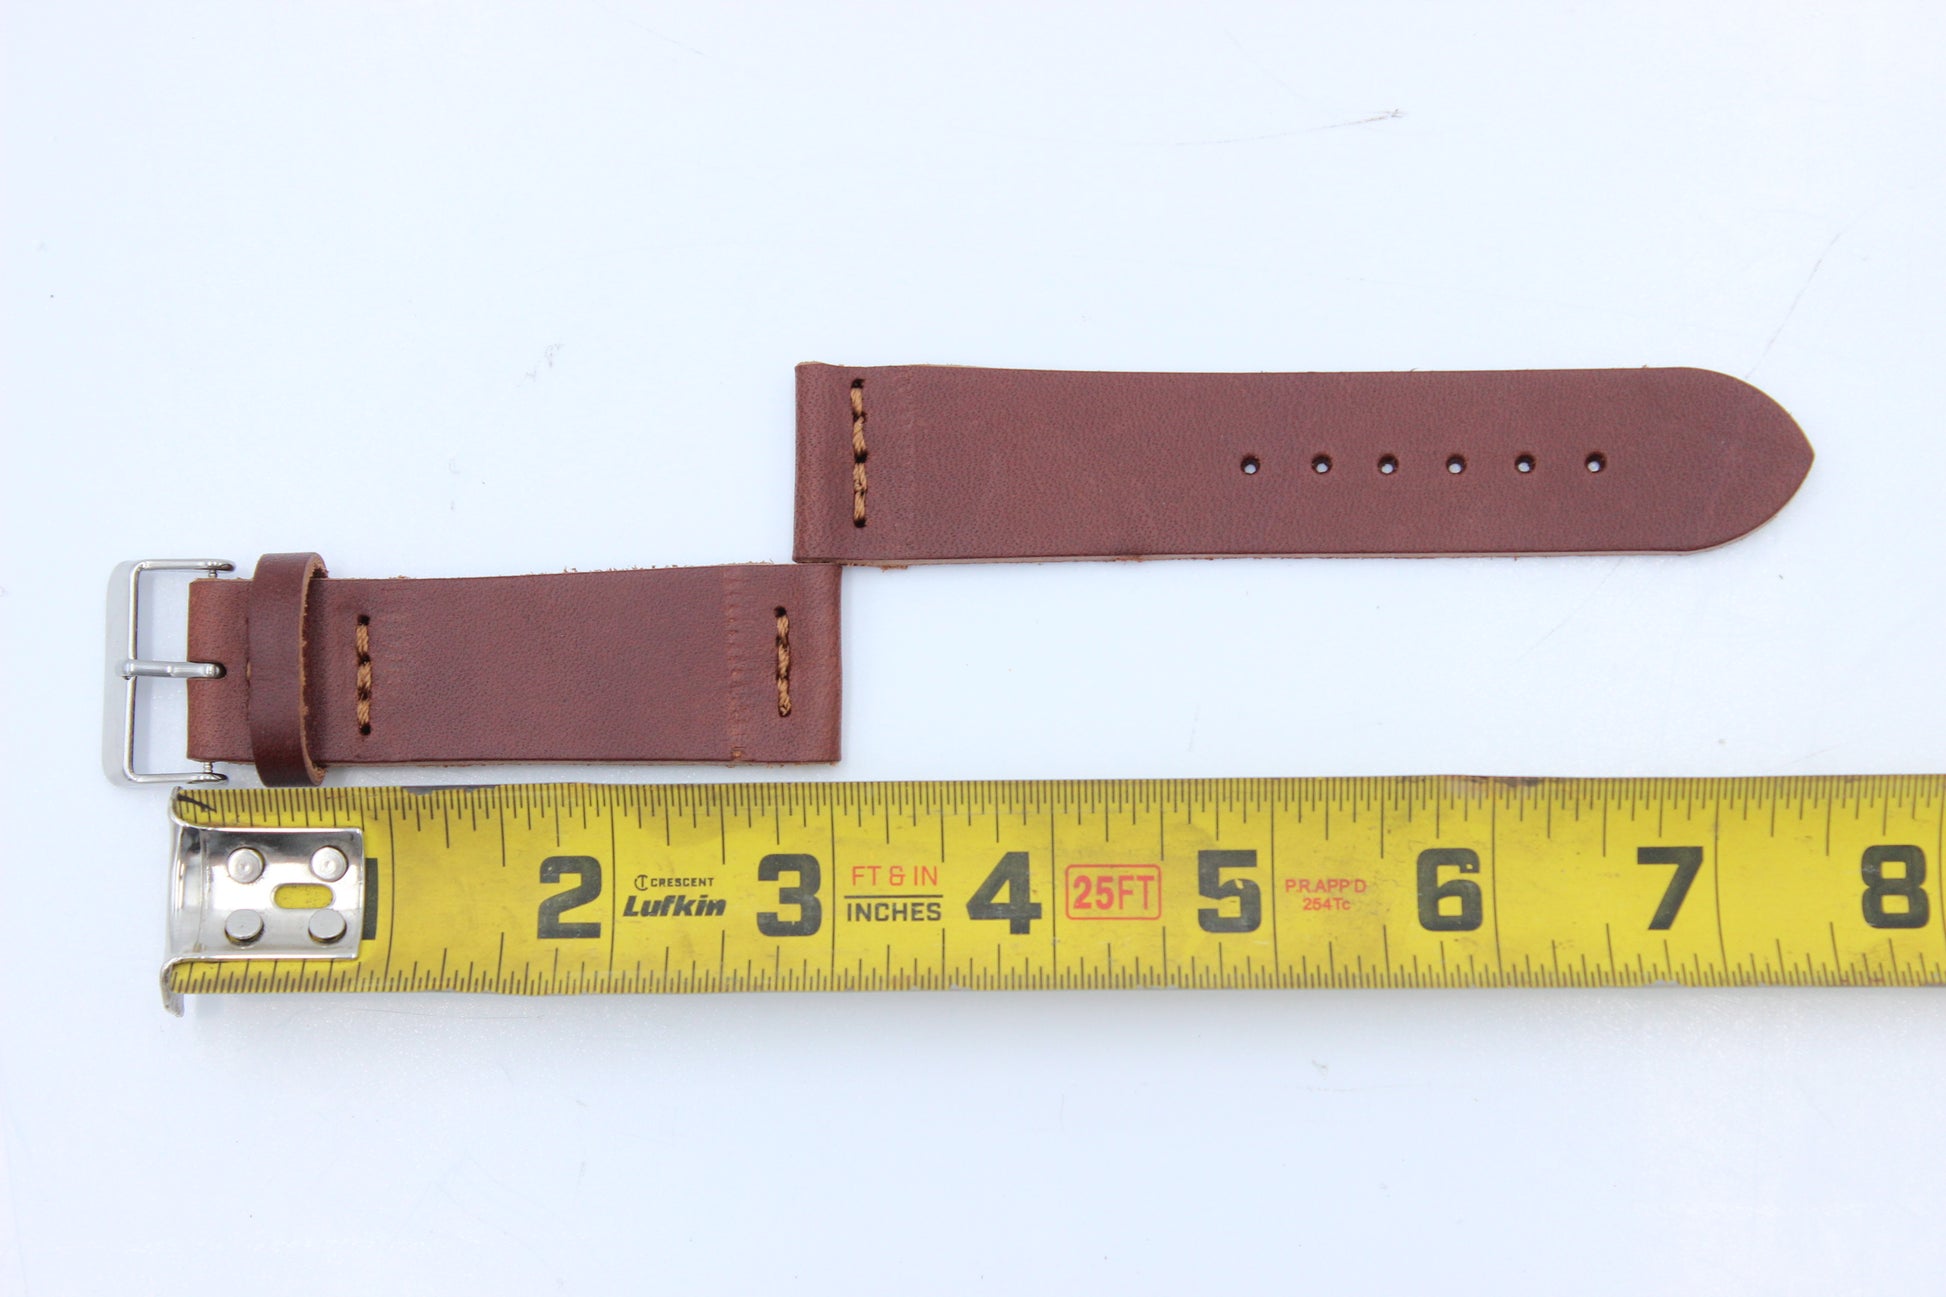 Thread Crafts Handmade Leather Watch Straps 22mm Width